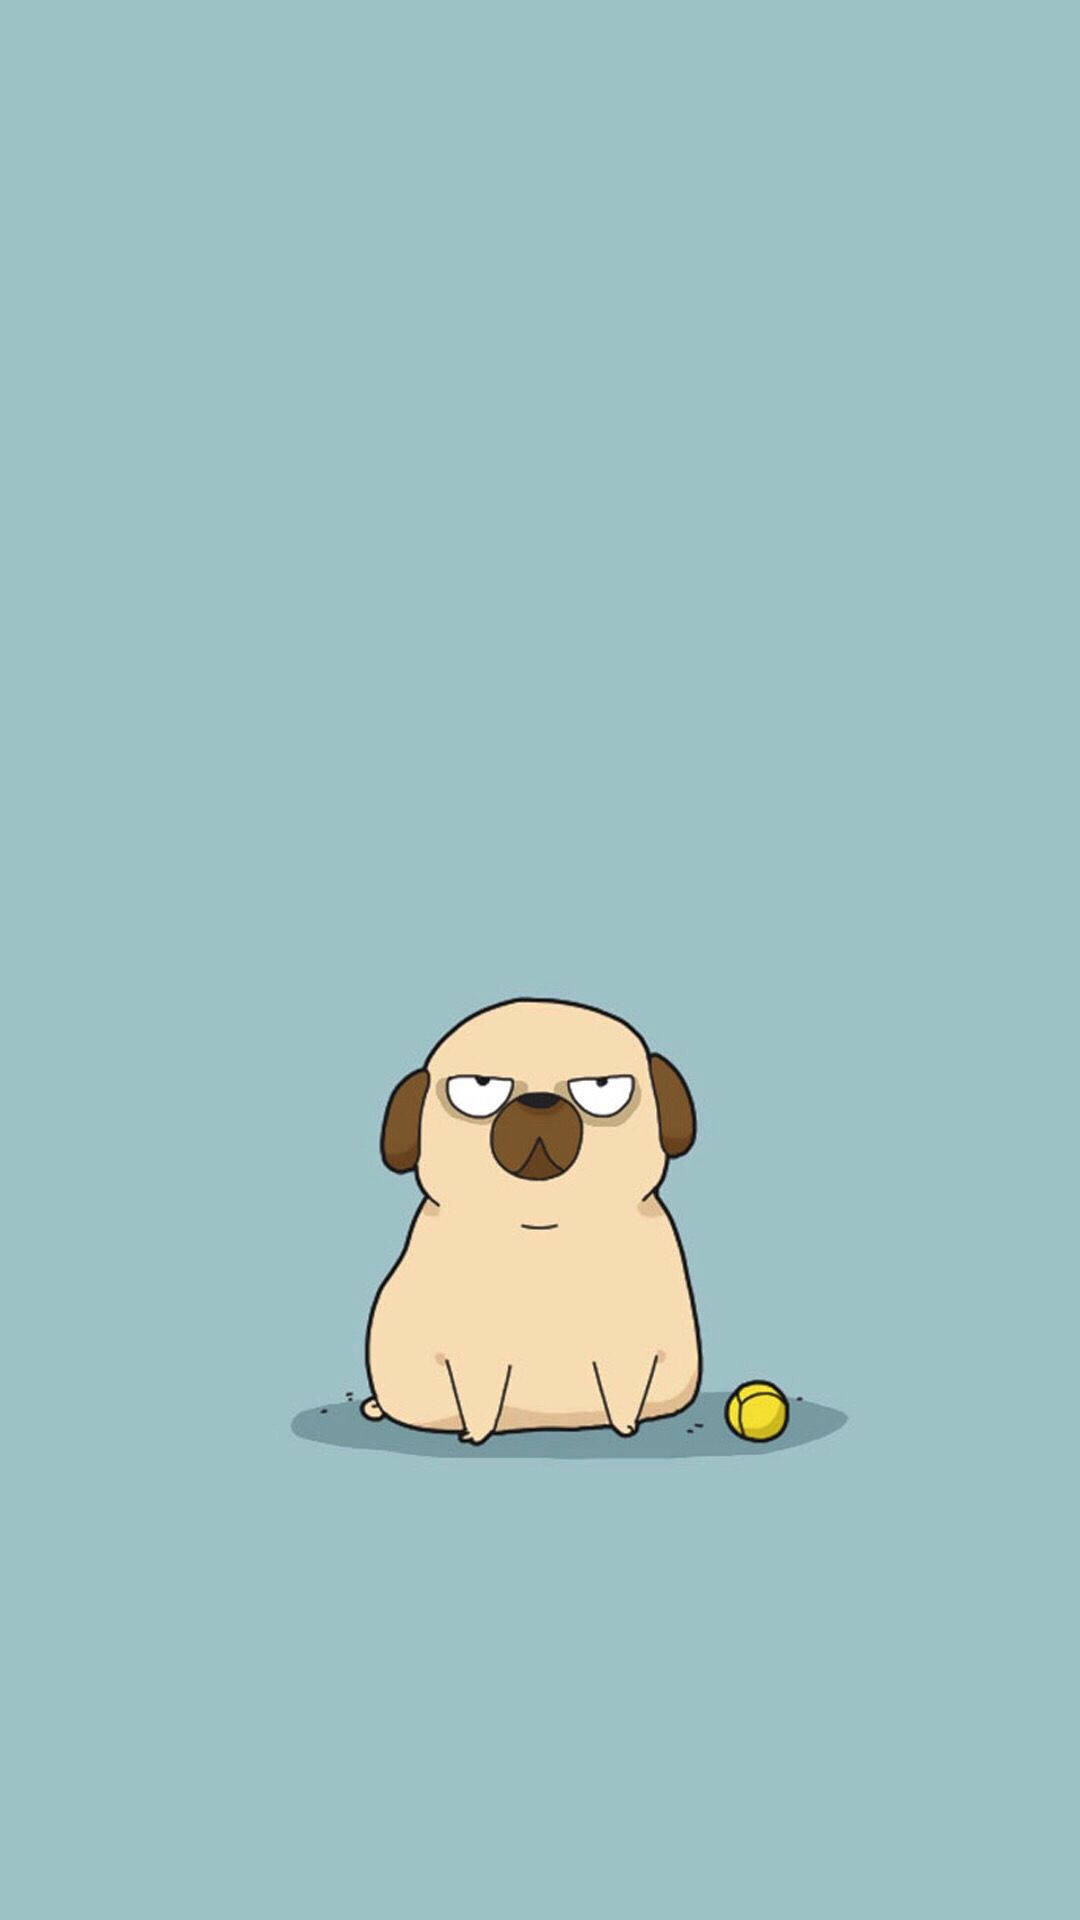 Download Cartoon Pug Dog With Ball Wallpaper